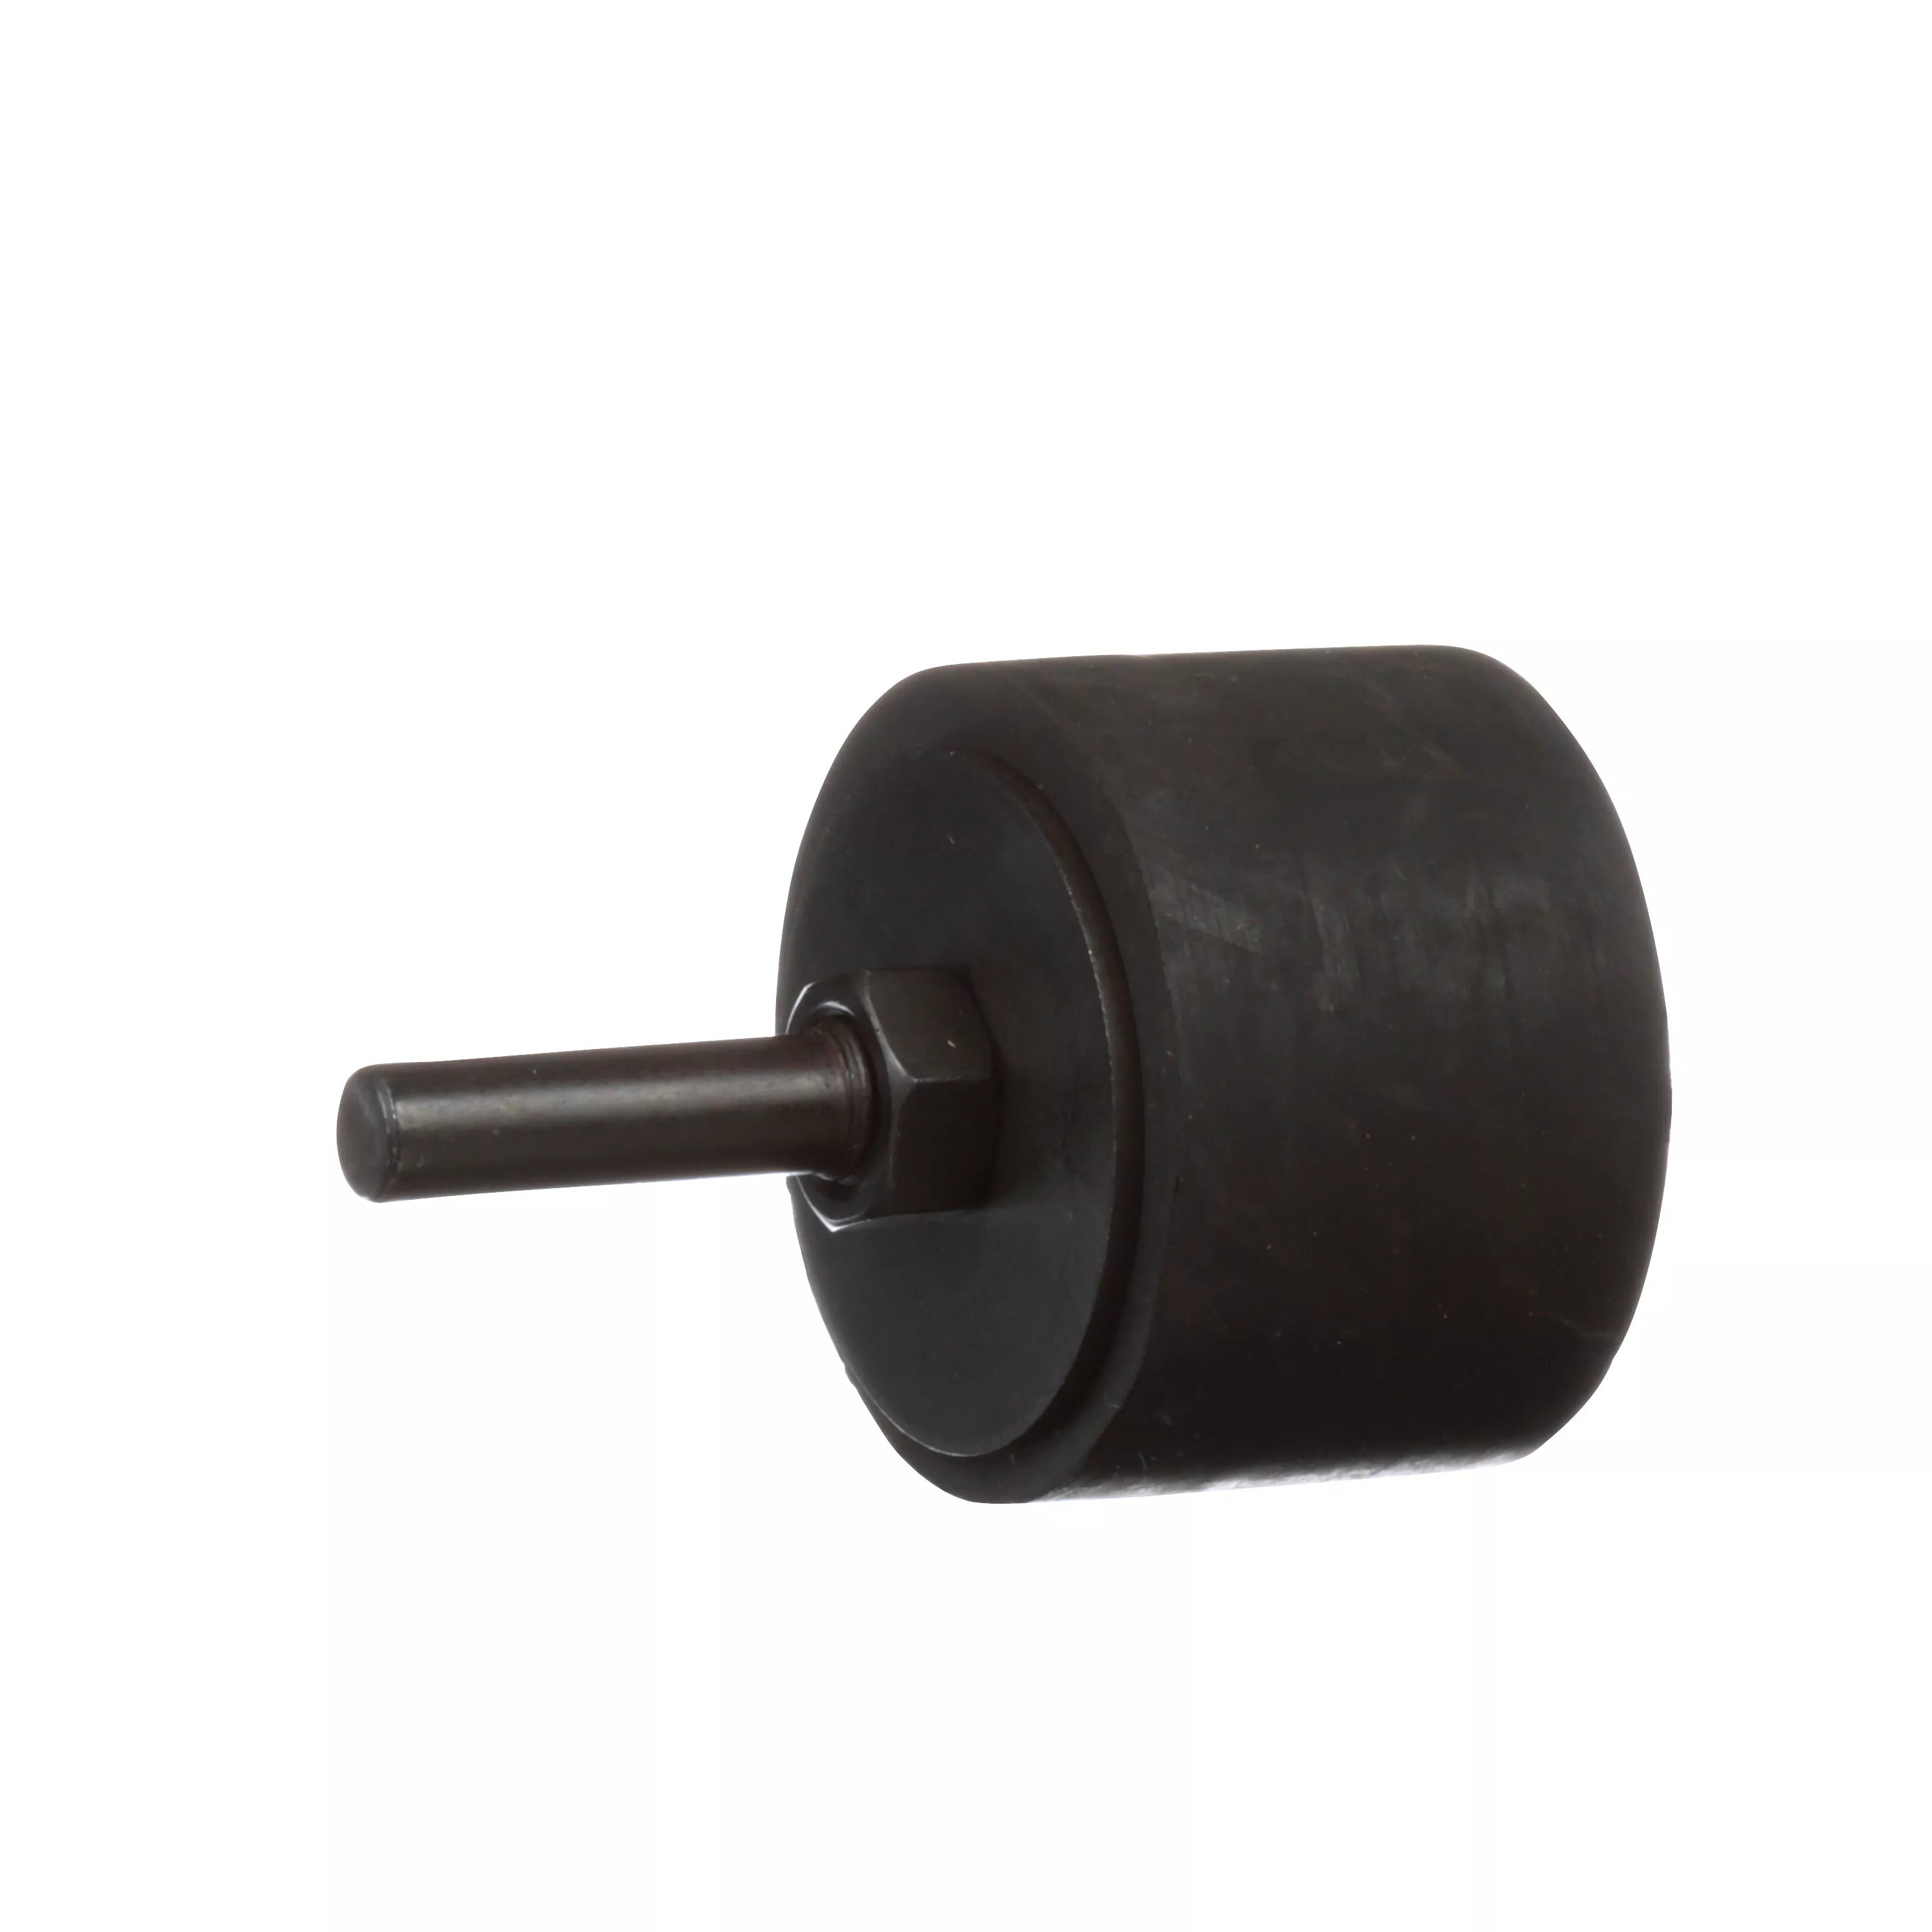 Standard Abrasives™ Rubber Sanding Drum 704431, 1-1/2 in x 1 in x 1/4
in, 10 ea/Case